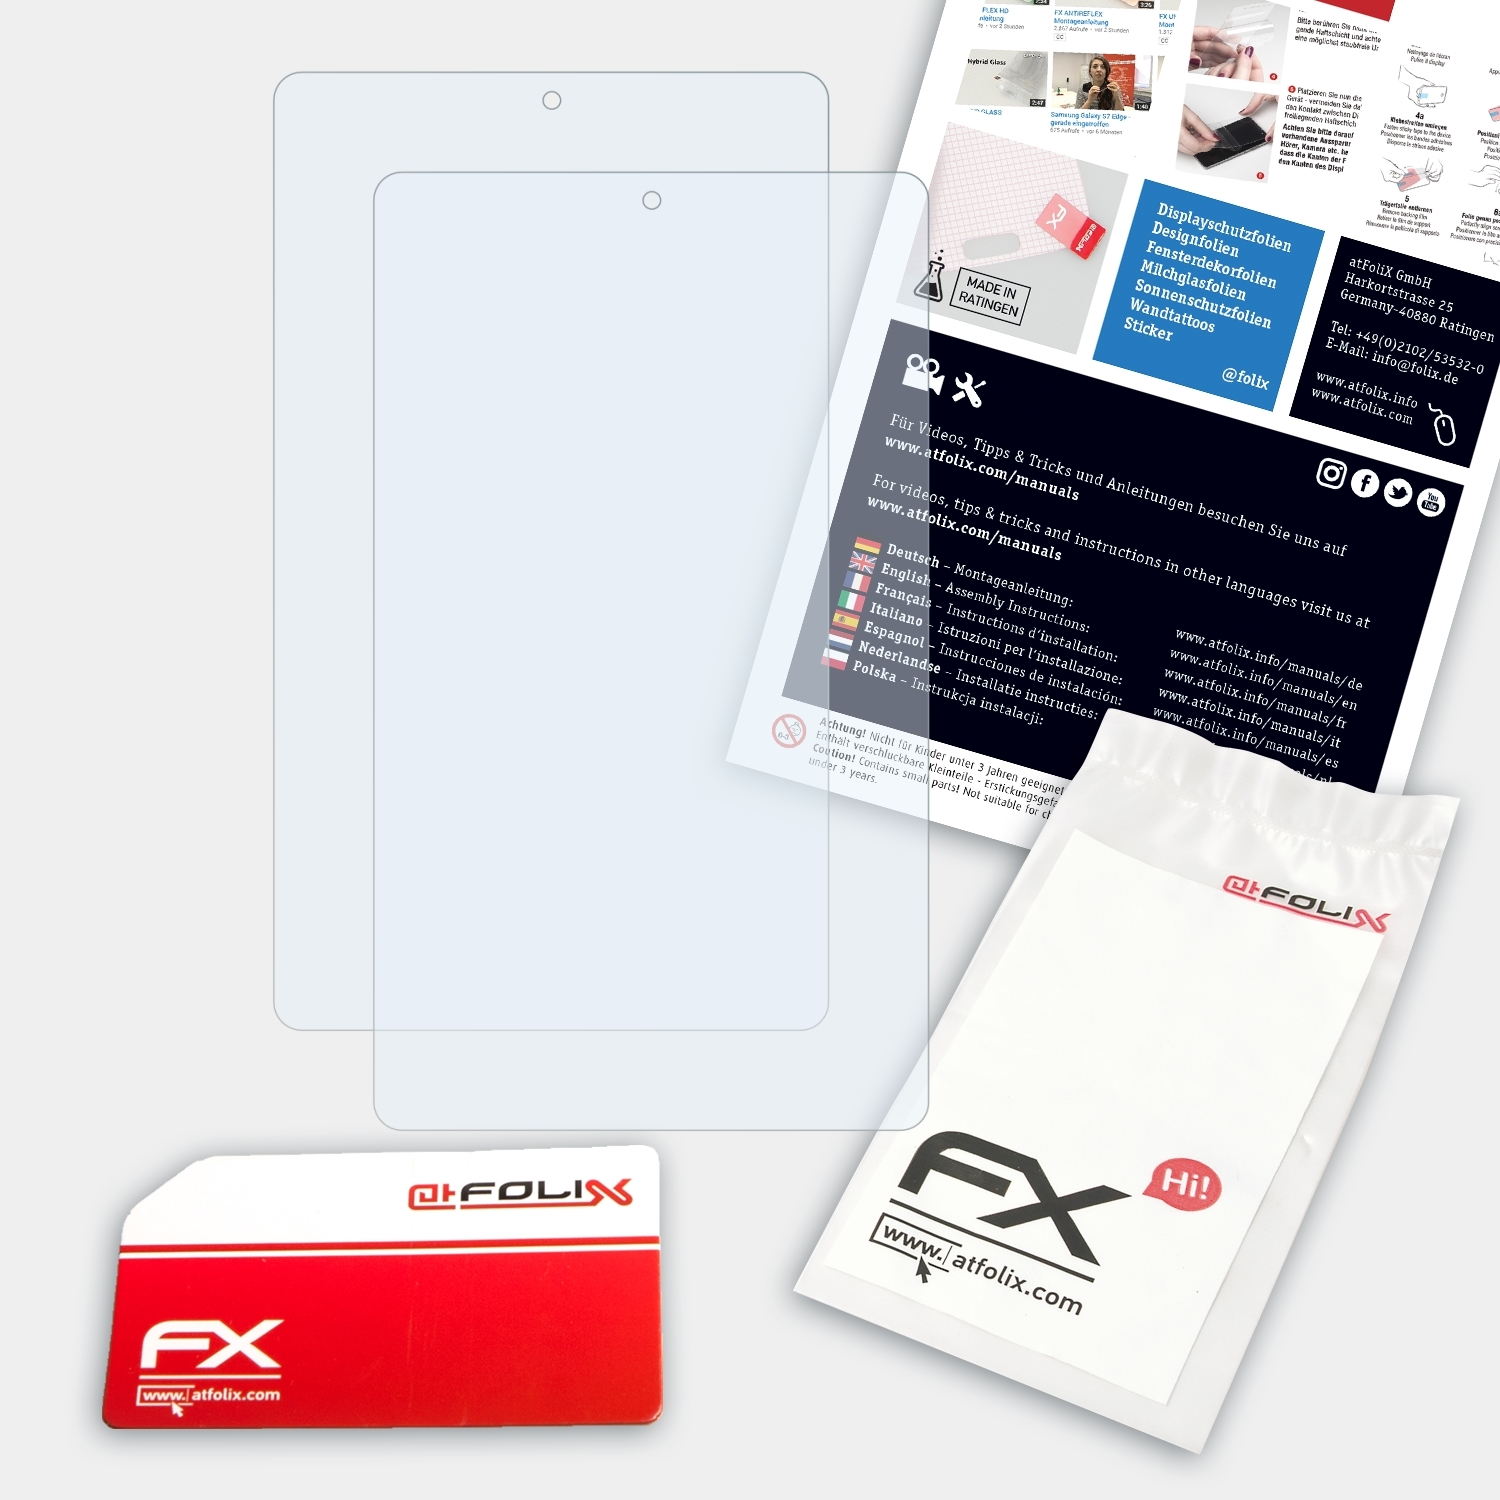 Pro) 2x ATFOLIX FX-Clear Teclast P80 Displayschutz(für